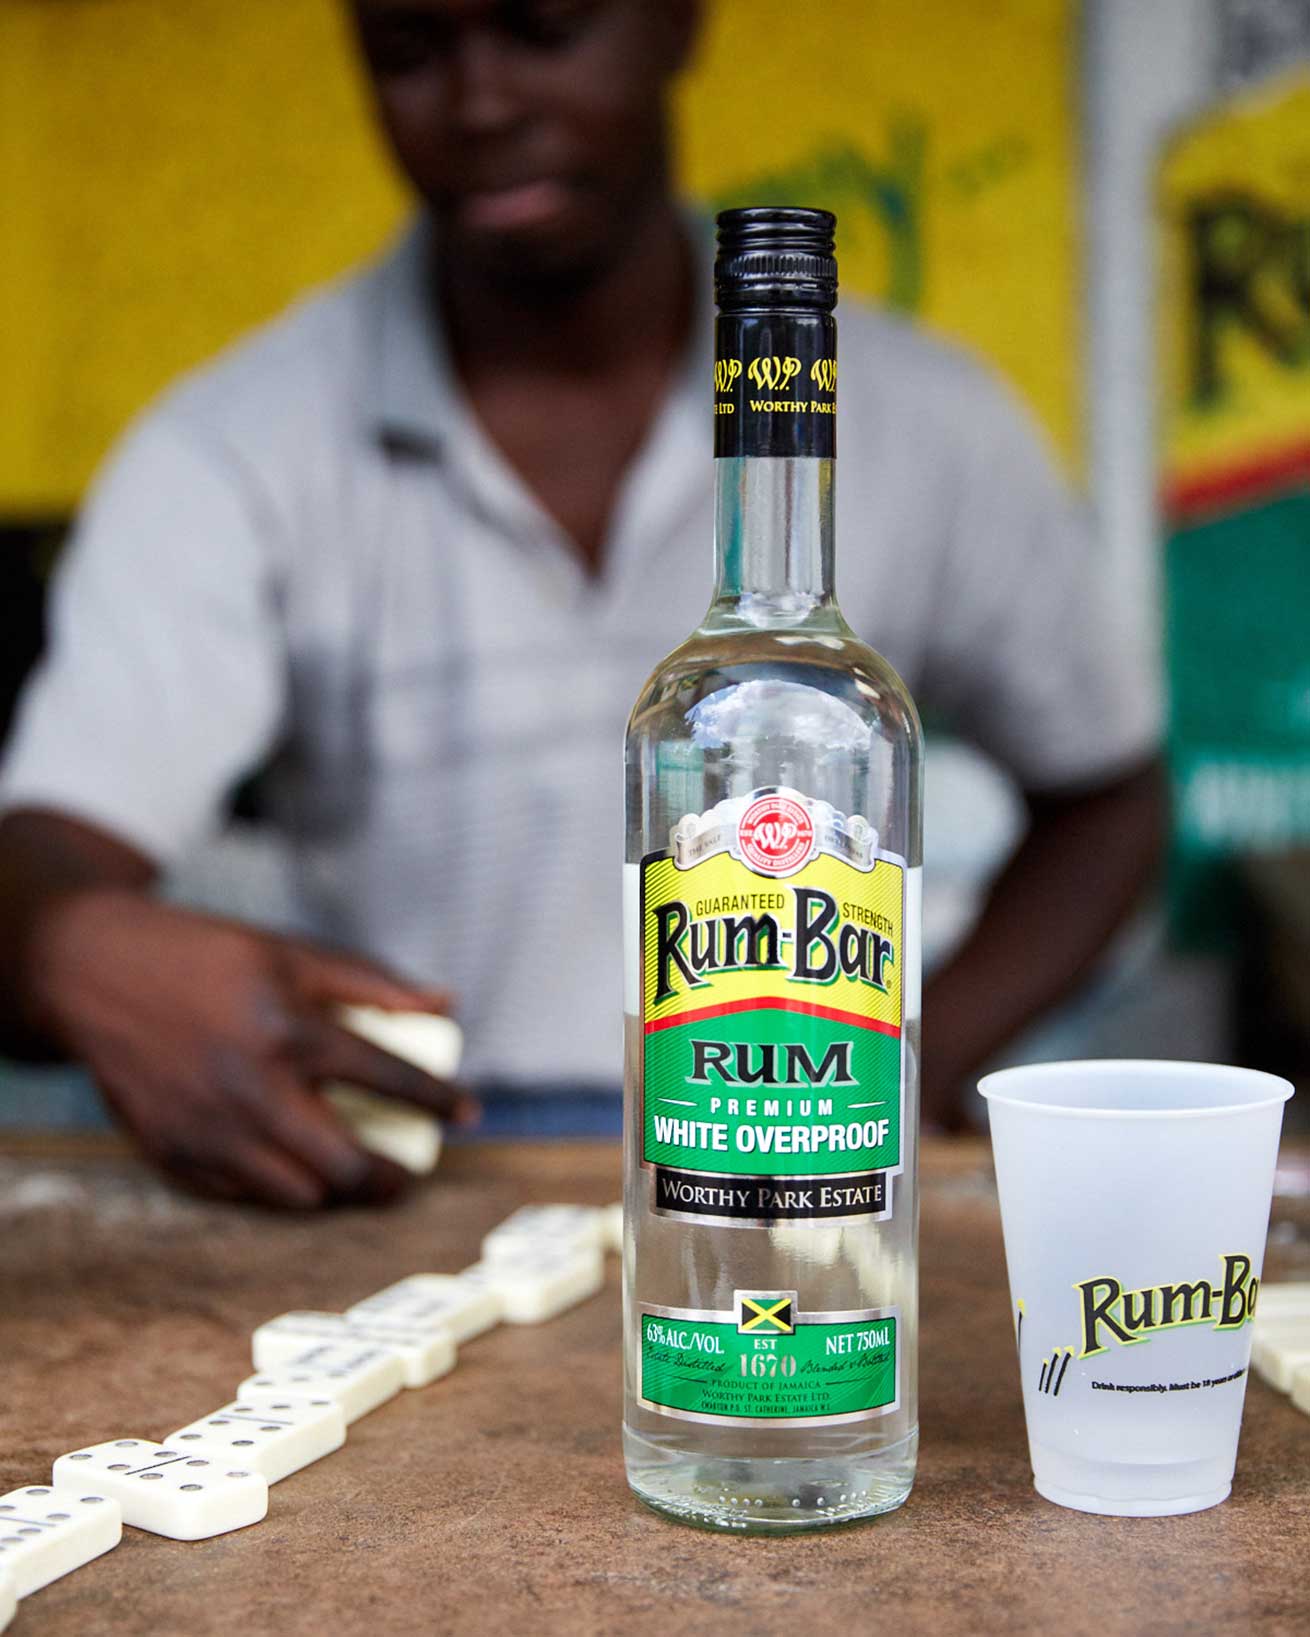 Rum-Bar on display during Jamaican dominos game